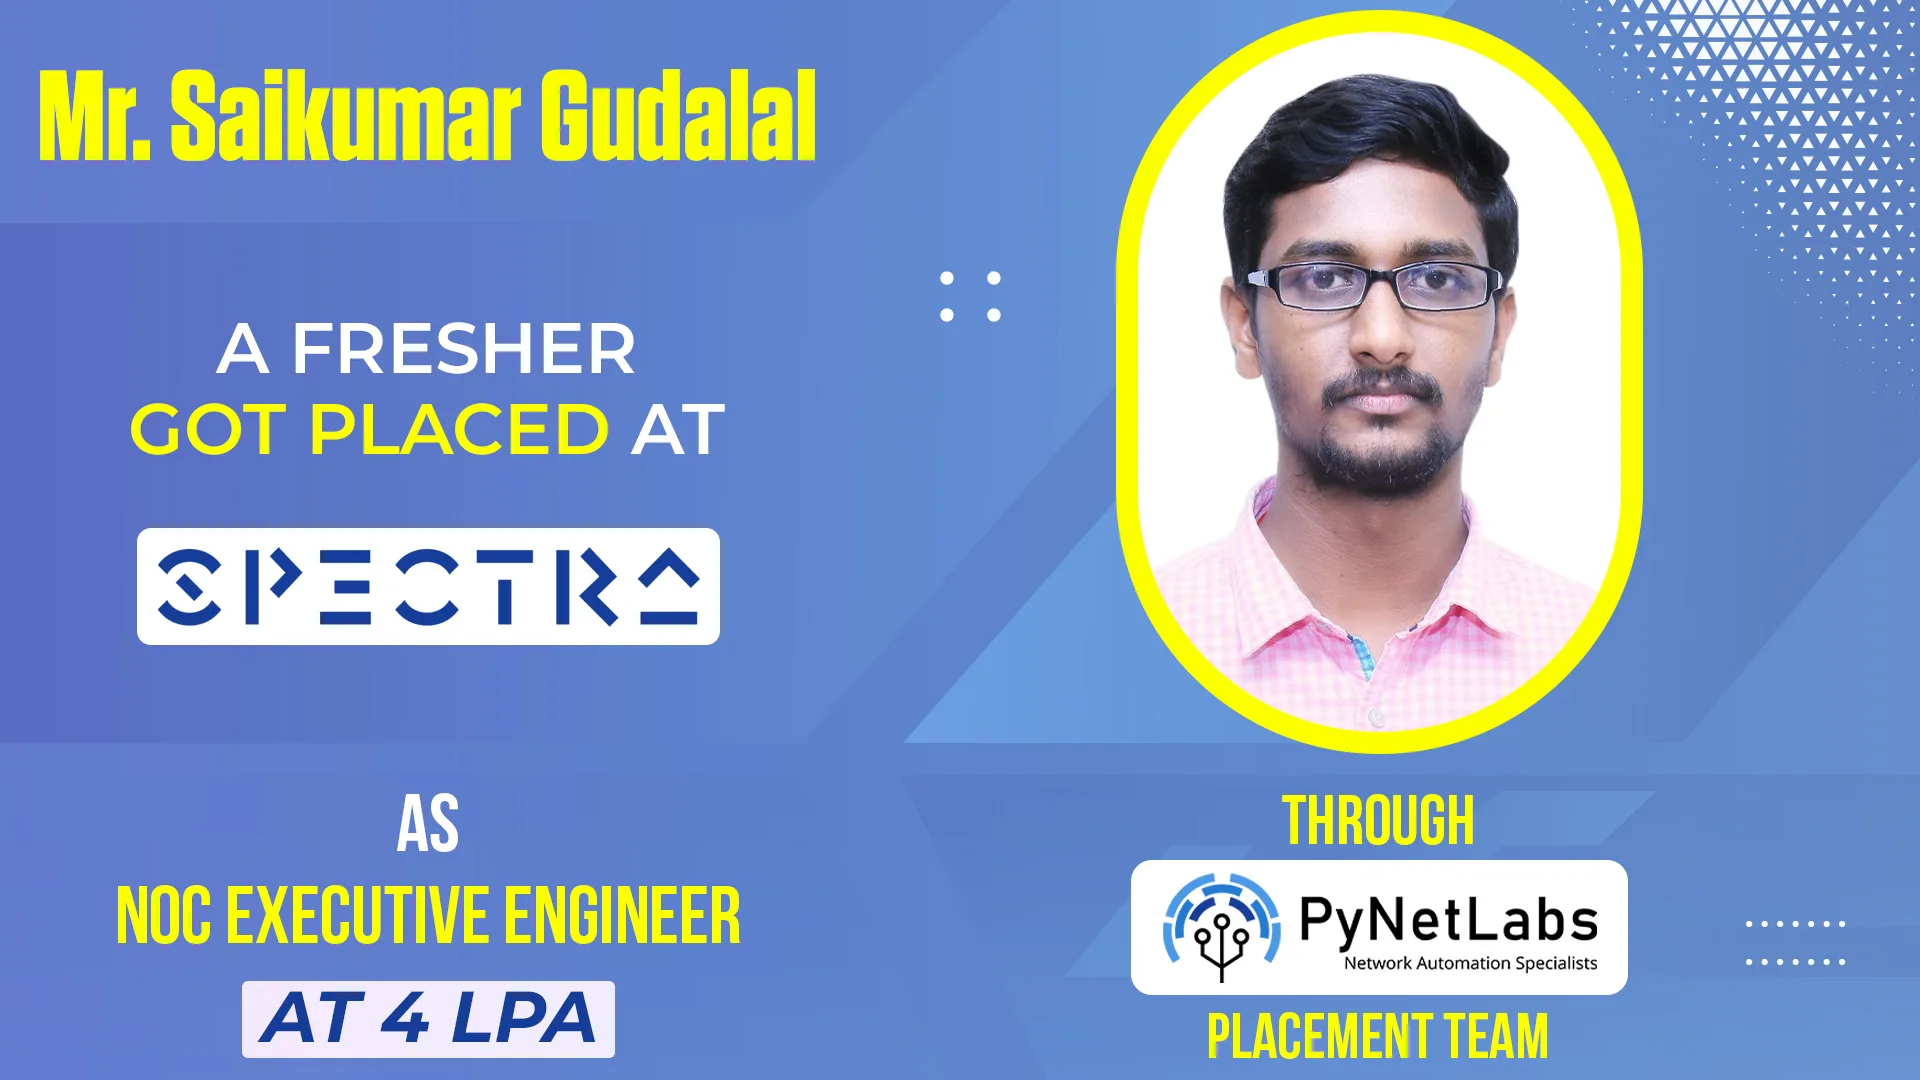 Mr. Saikumar Gudalal, a fresher, got placed at Spectra as NOC Executive Engineer at 4 LPA through PyNet Labs